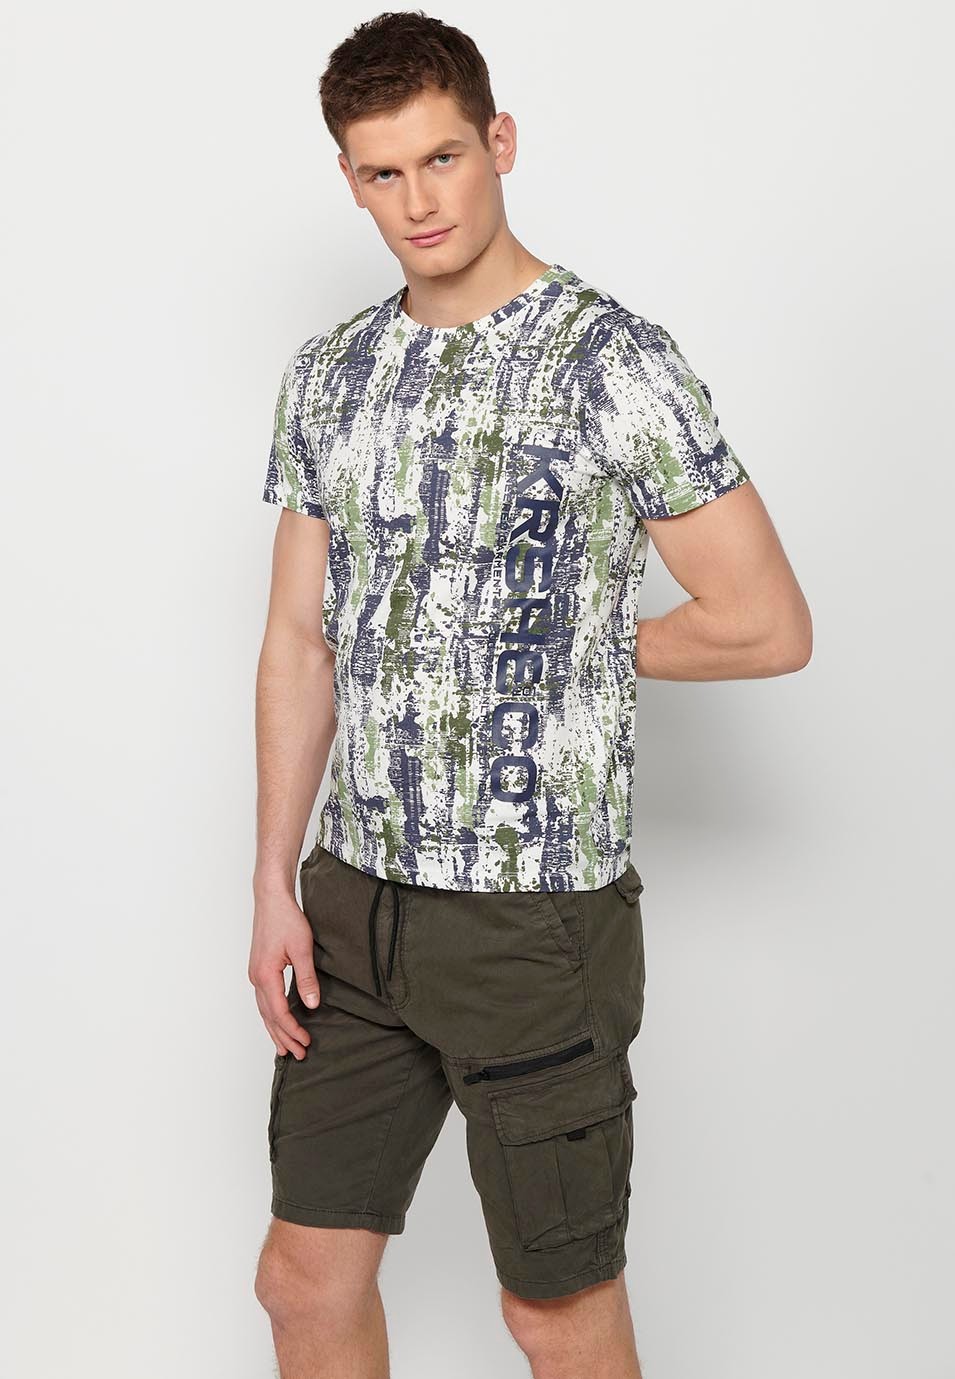 Men's multi-color printed cotton short-sleeved T-shirt